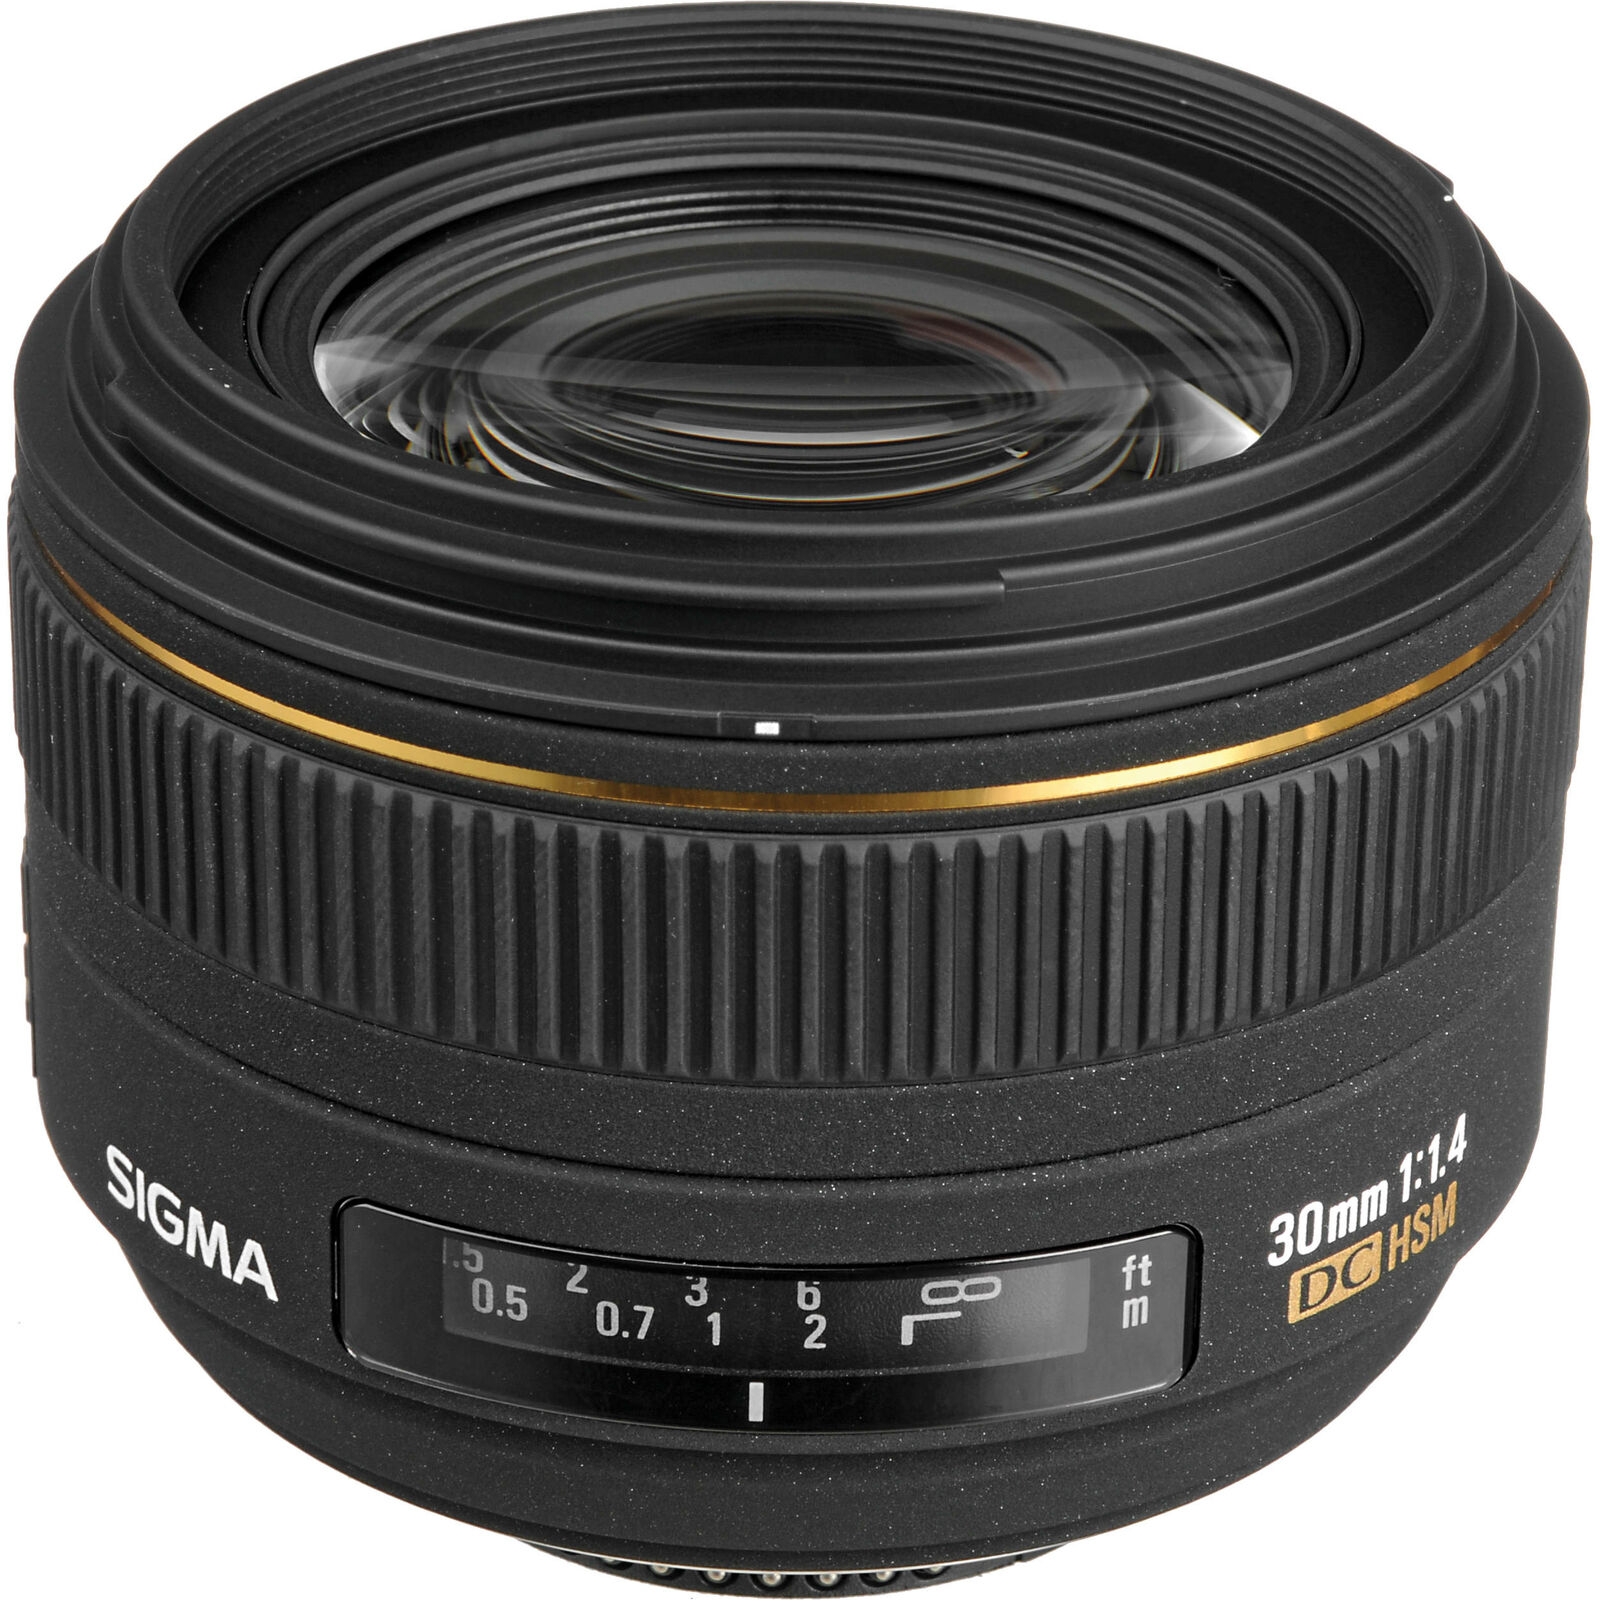 Sigma DG 30mm f/1.4 HSM EX DC Lens For Canon for sale online | eBay